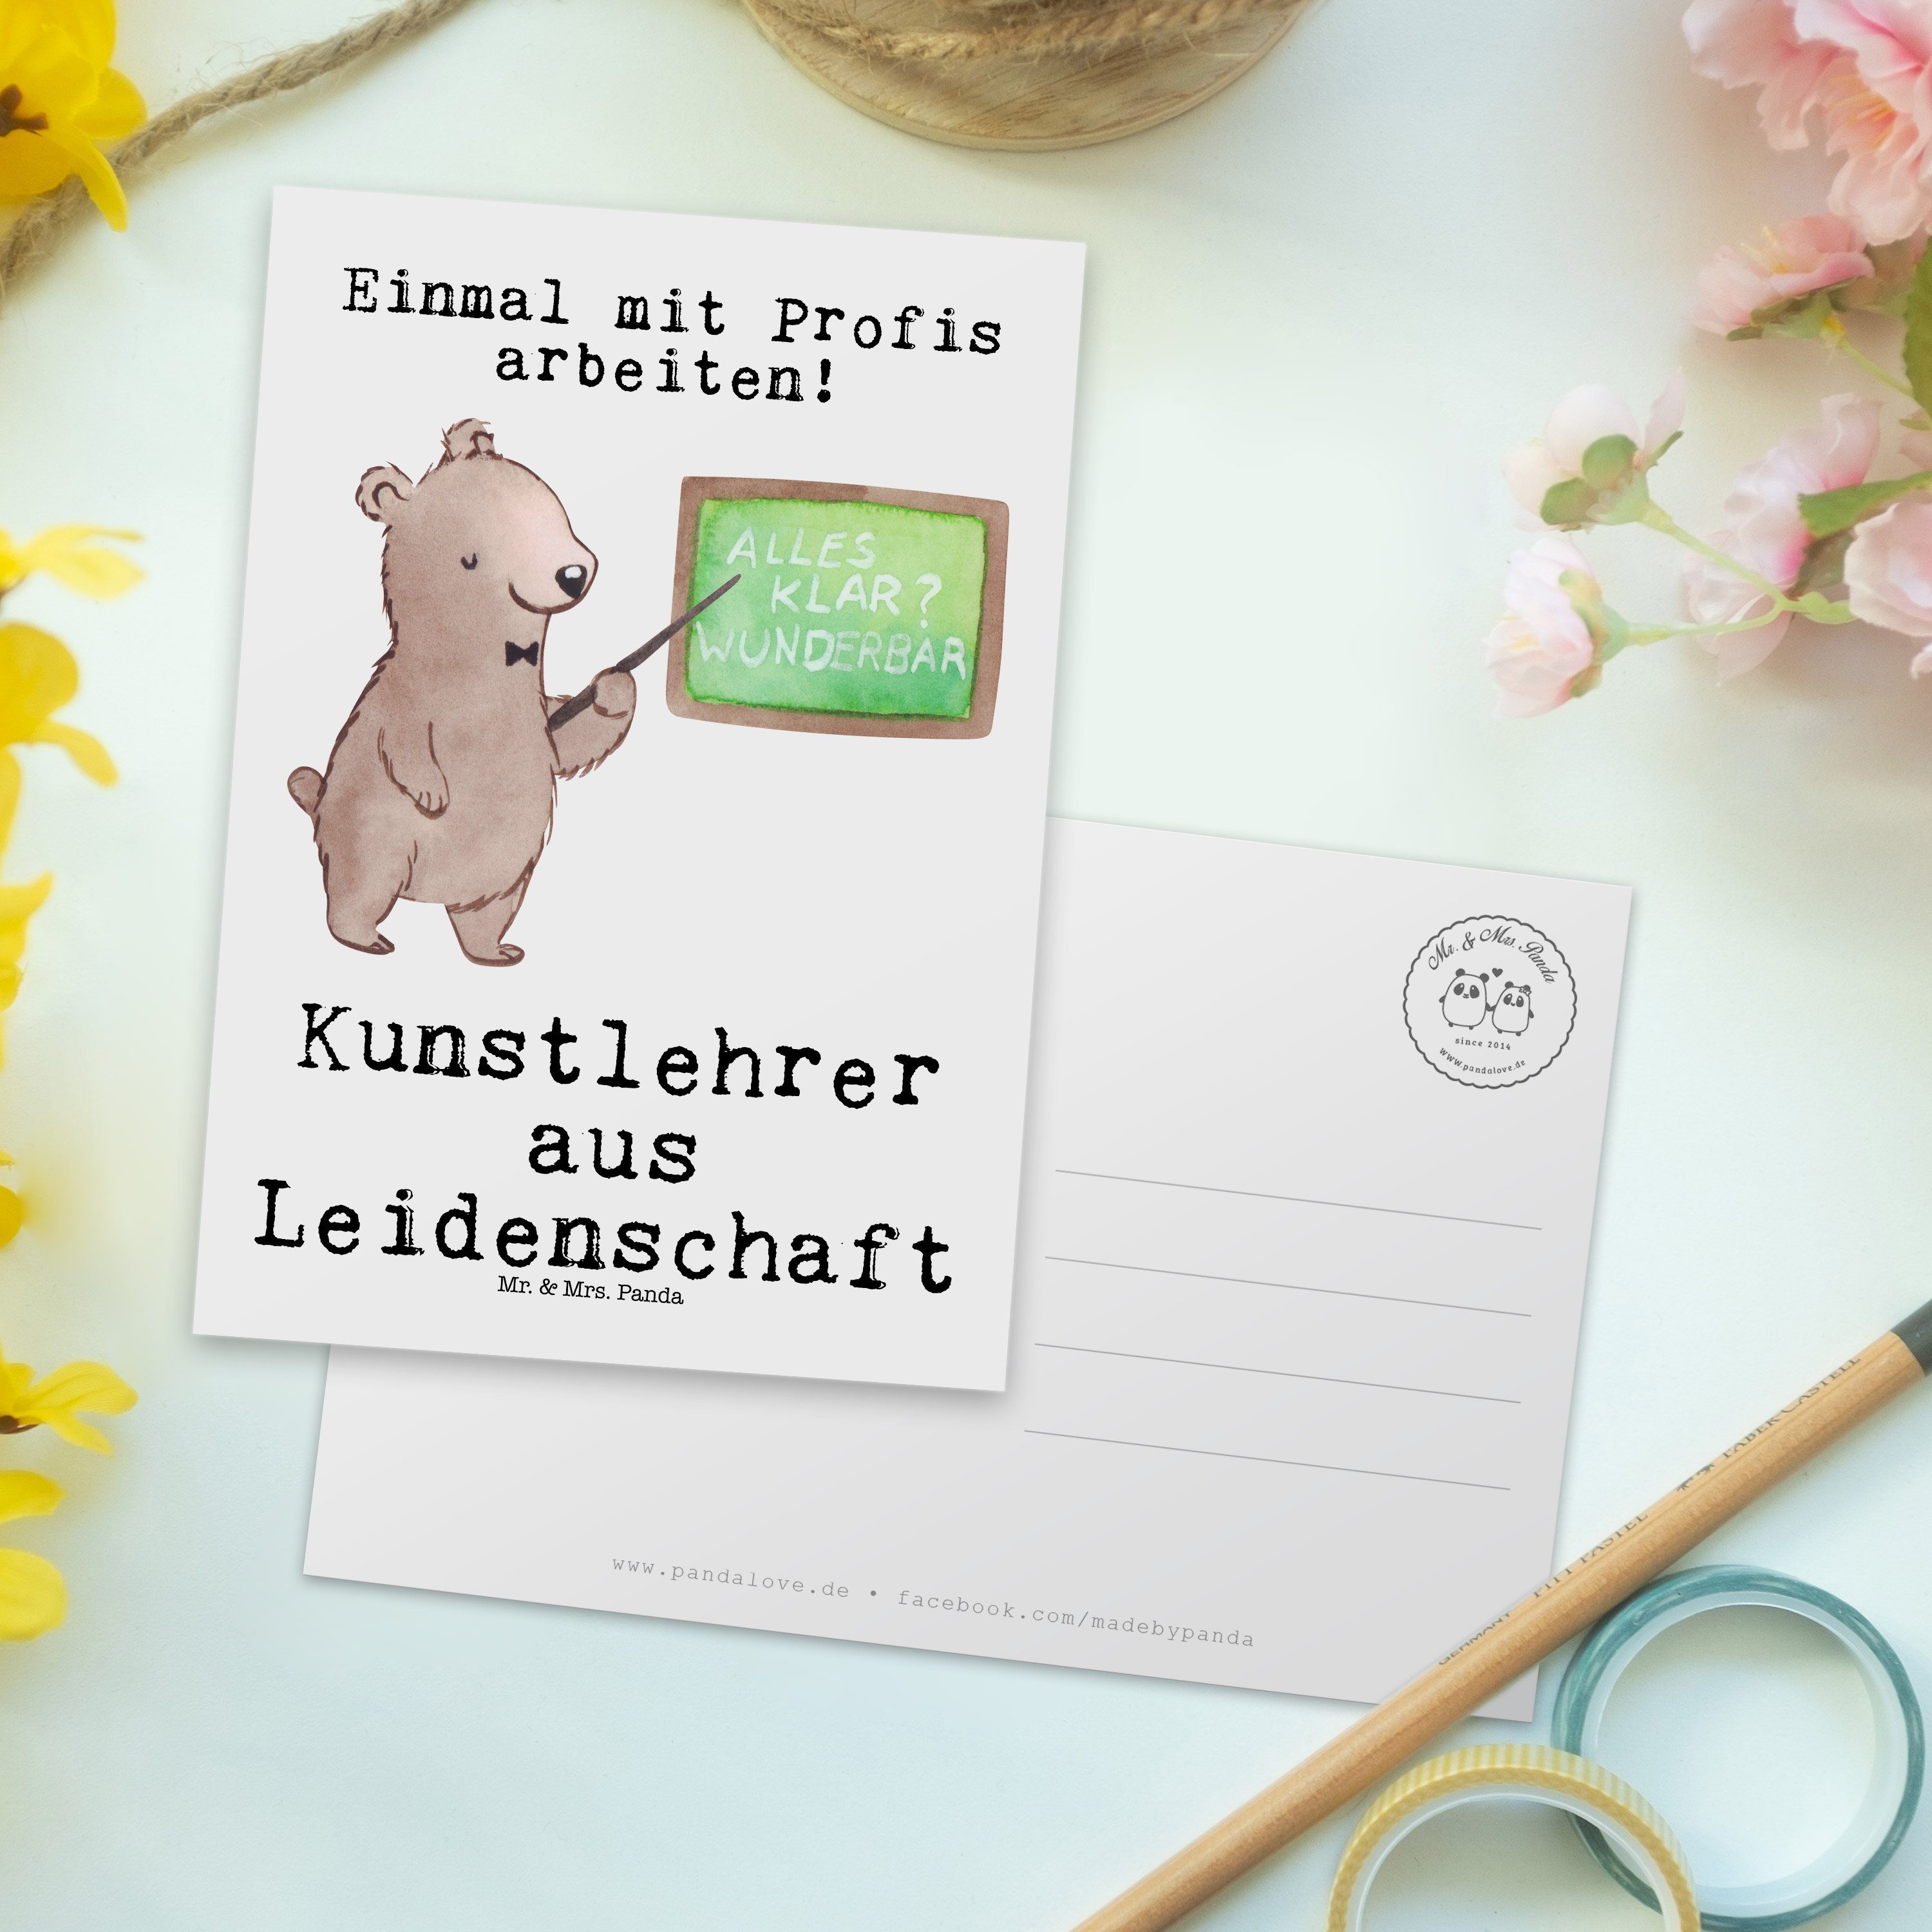 Panda & Mr. K Weiß Dankeskarte, Leidenschaft aus Mrs. Beruf, - Postkarte Geschenk, Kunstlehrer -